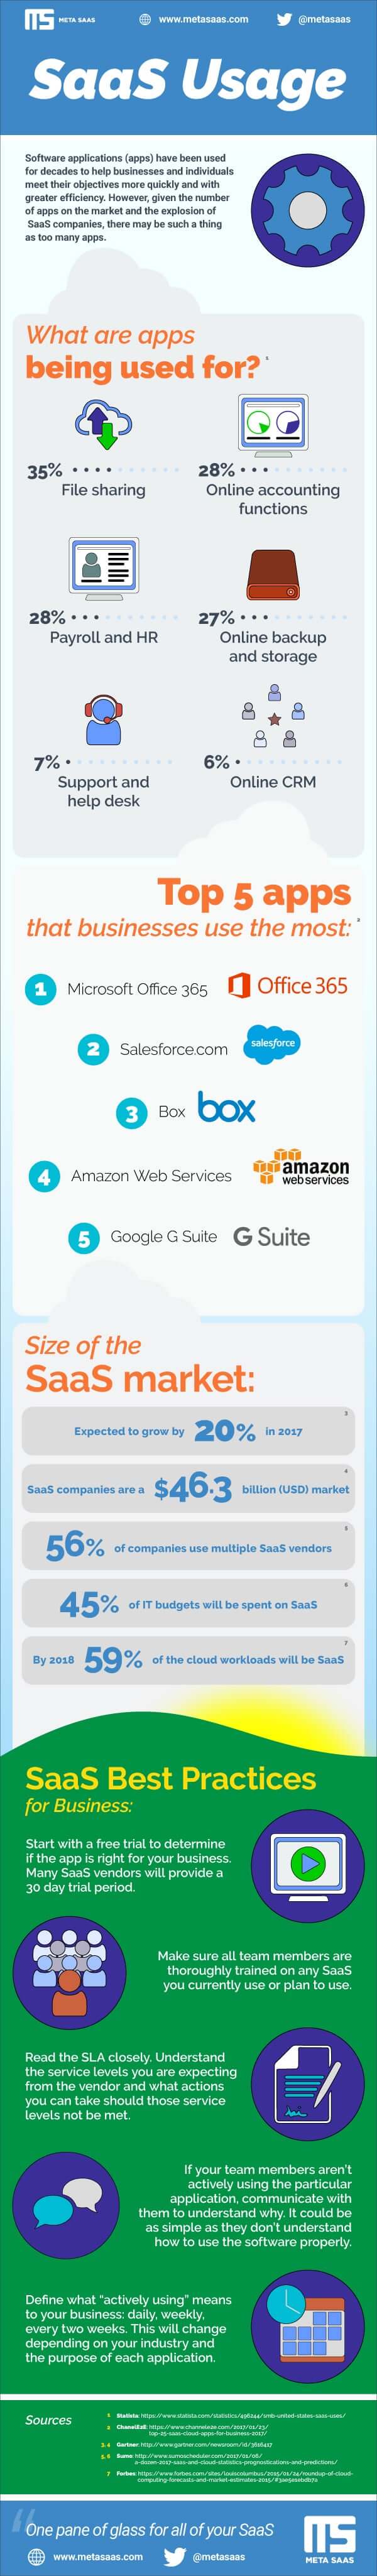 SaaS Usage infographic